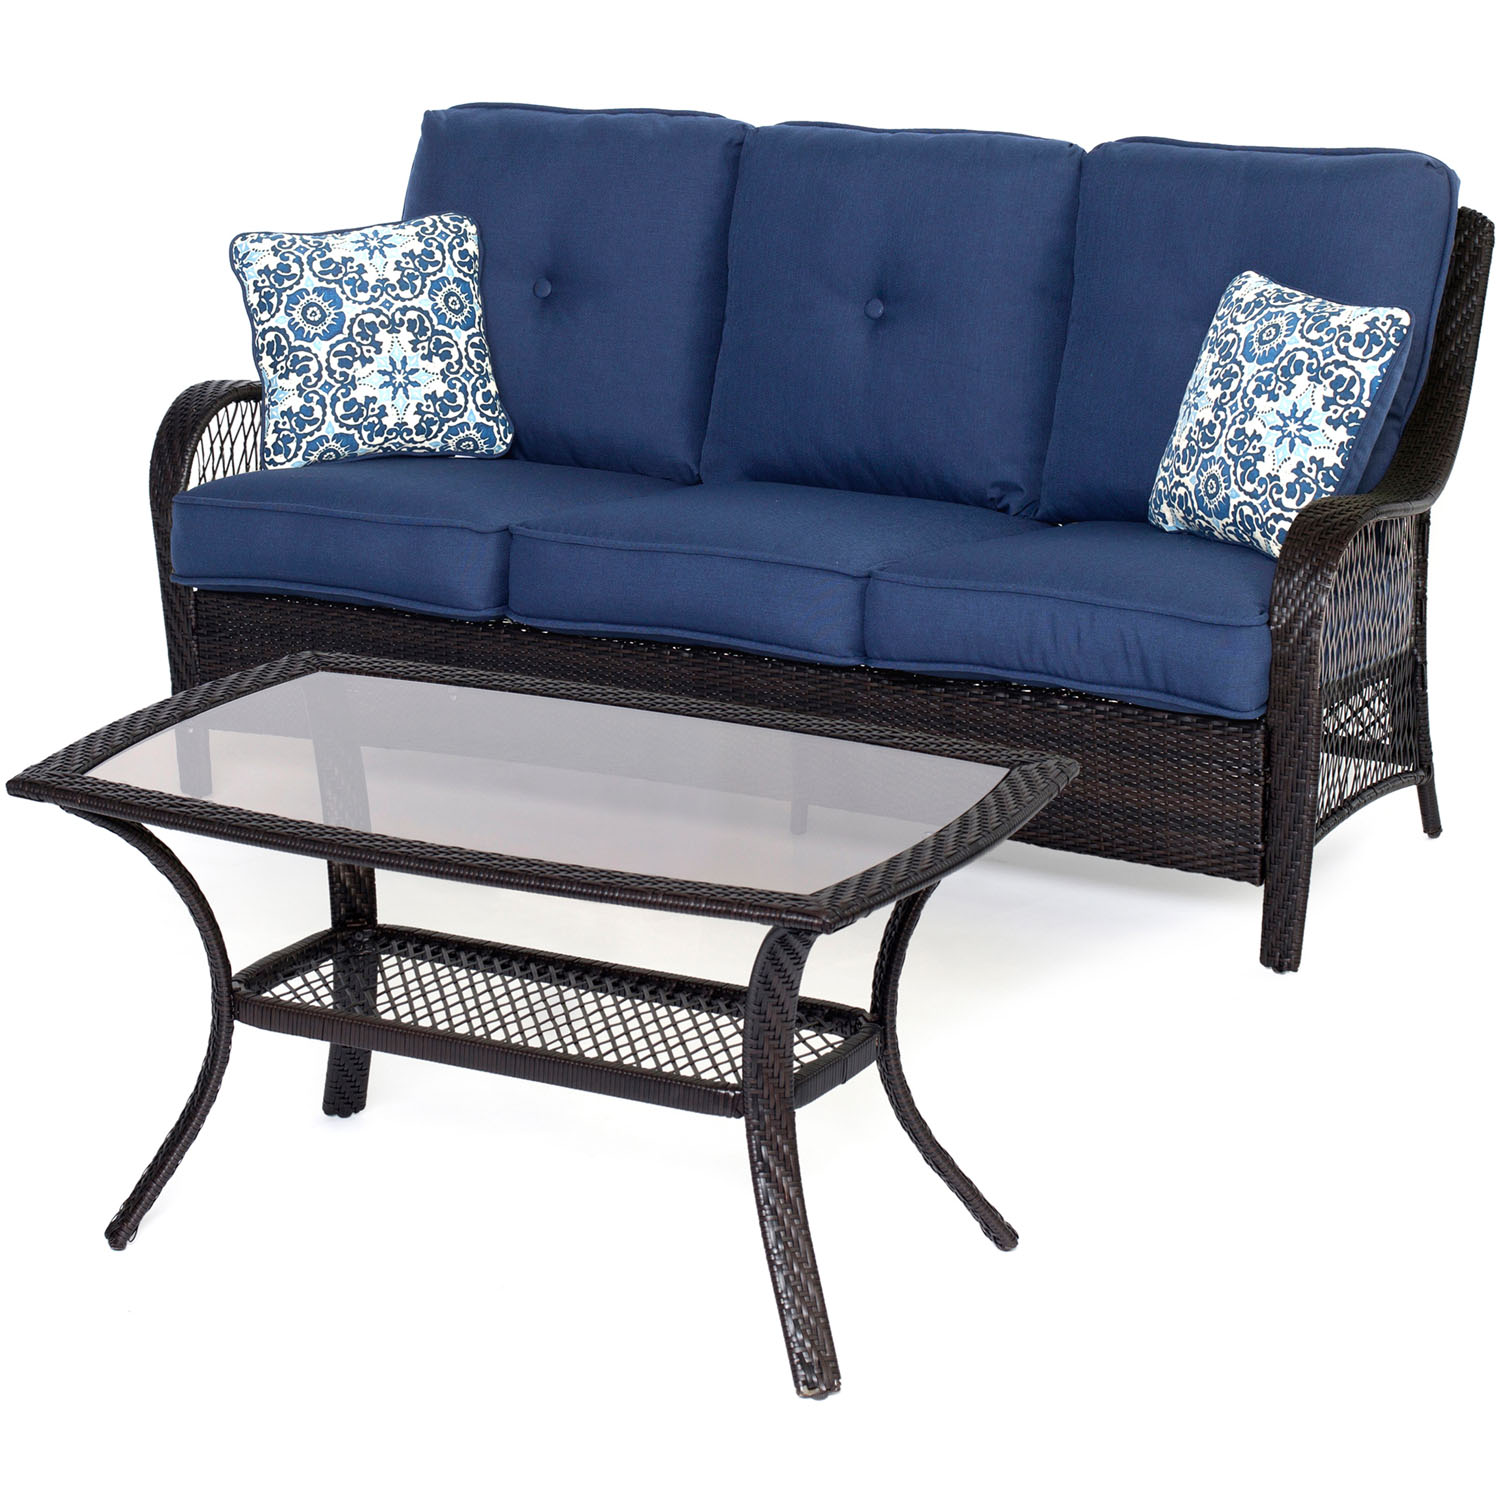 Hanover Orleans 2-Piece Wicker Outdoor Patio Sofa Set, Navy Blue - image 1 of 5